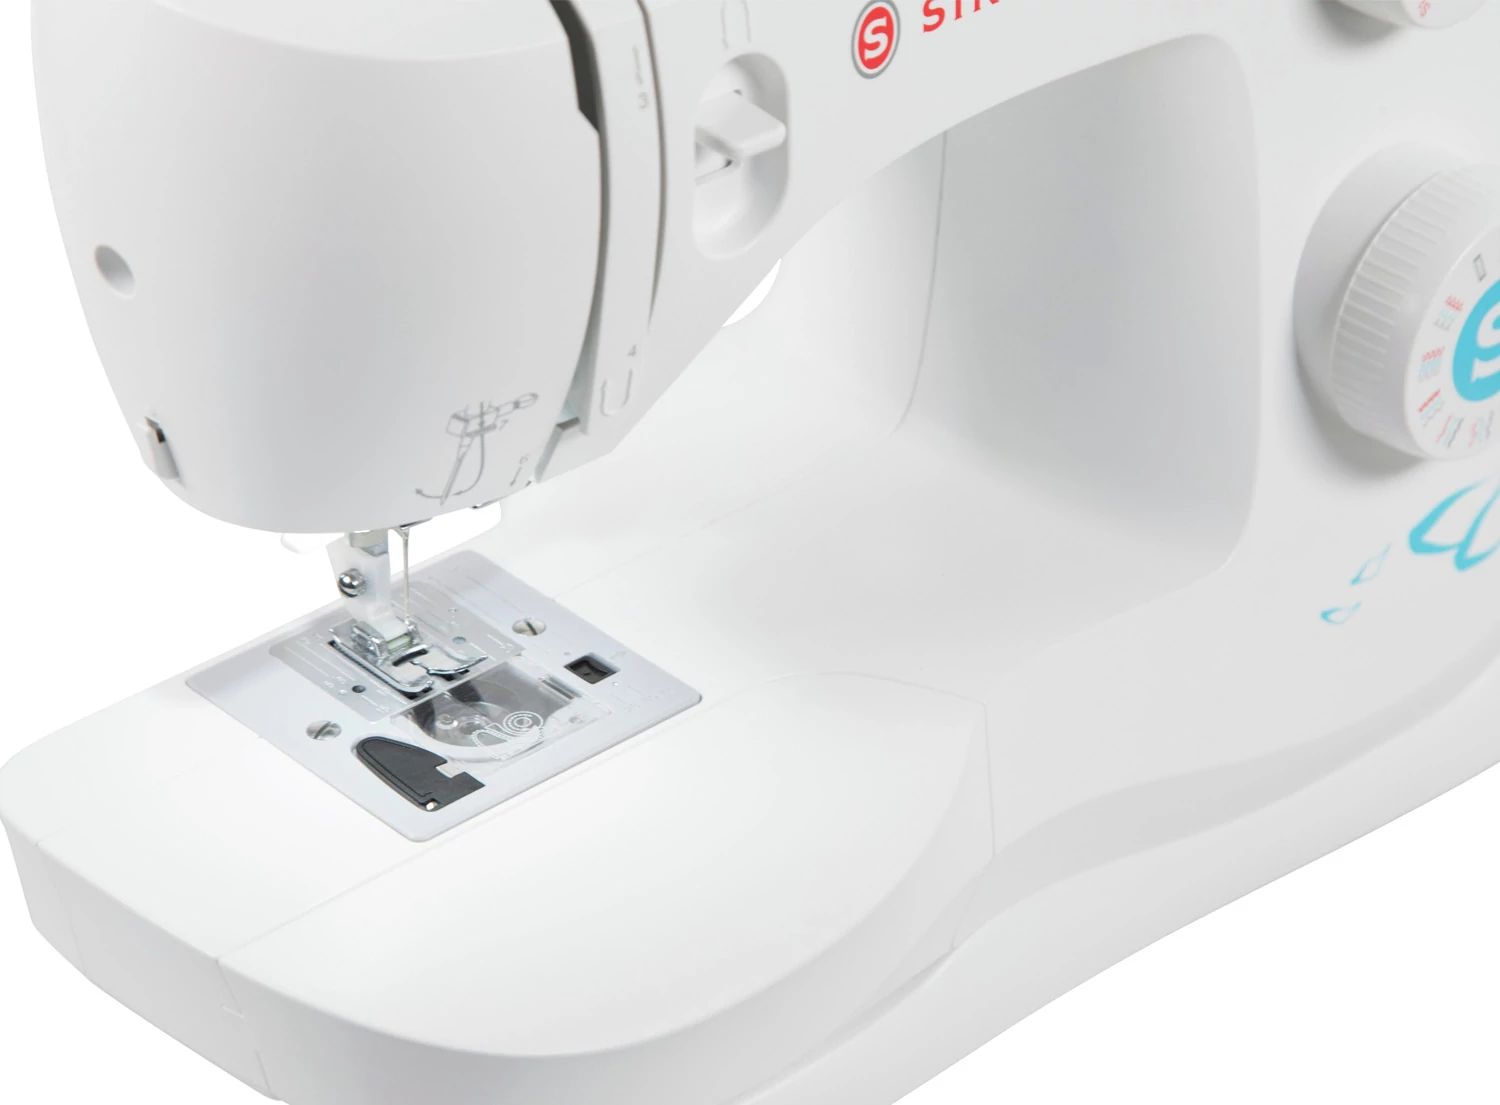 Simple™ 3337 Sewing Machine